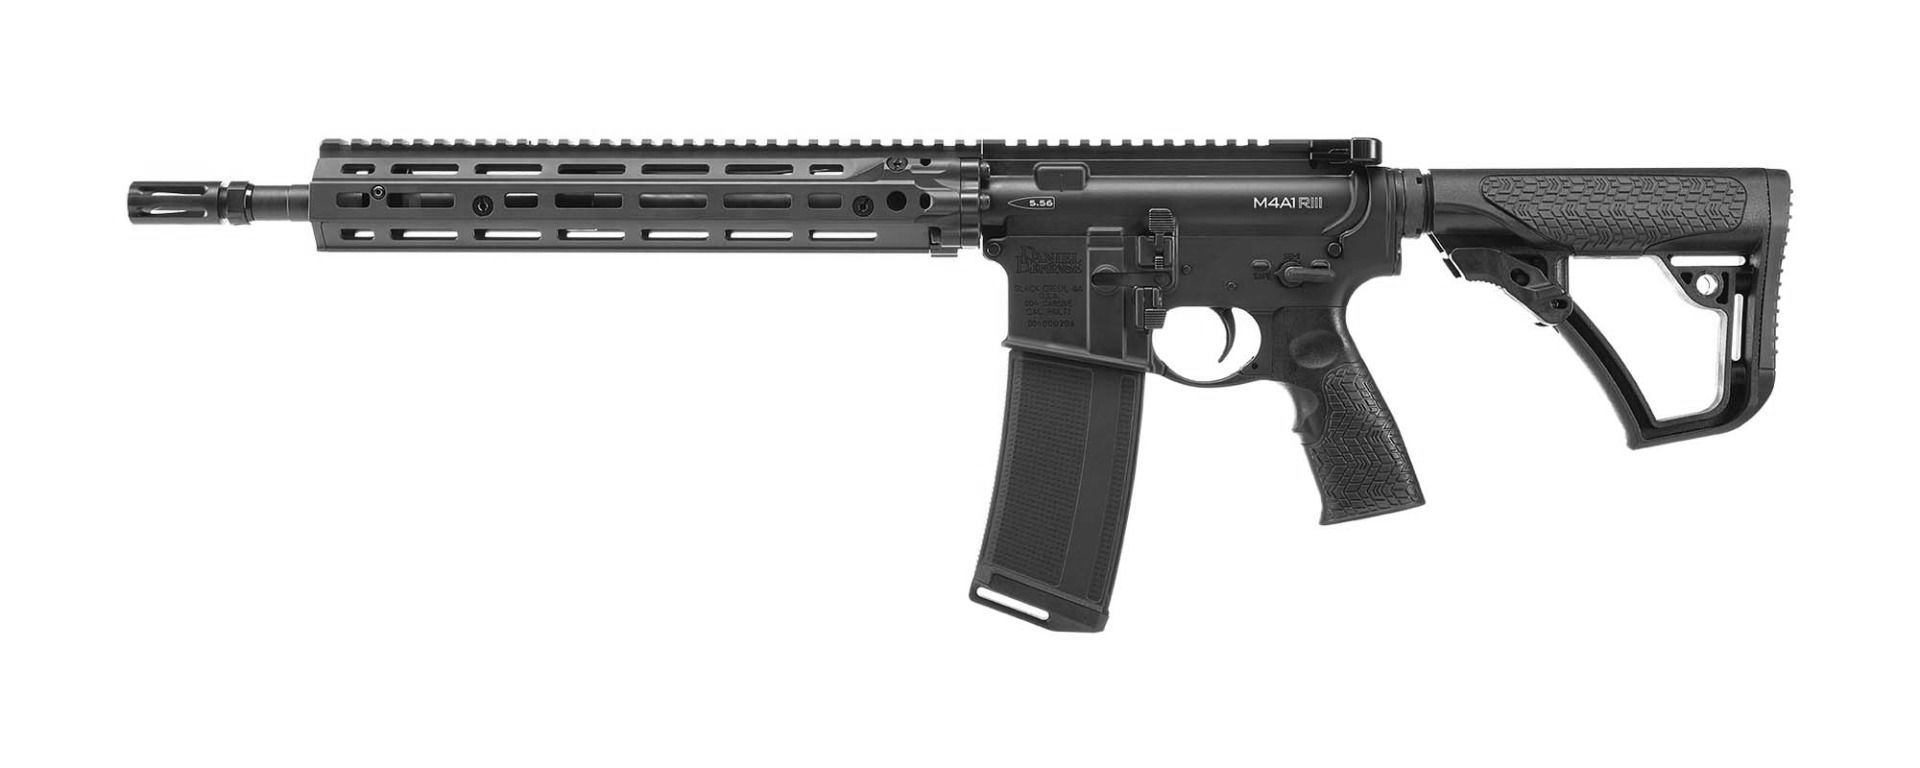 https://cityarsenal.com/product/daniel-defense-m4a1-riii-semi-auto-ar15-rifle-exclusive-black-finish-02-191-10613-047/